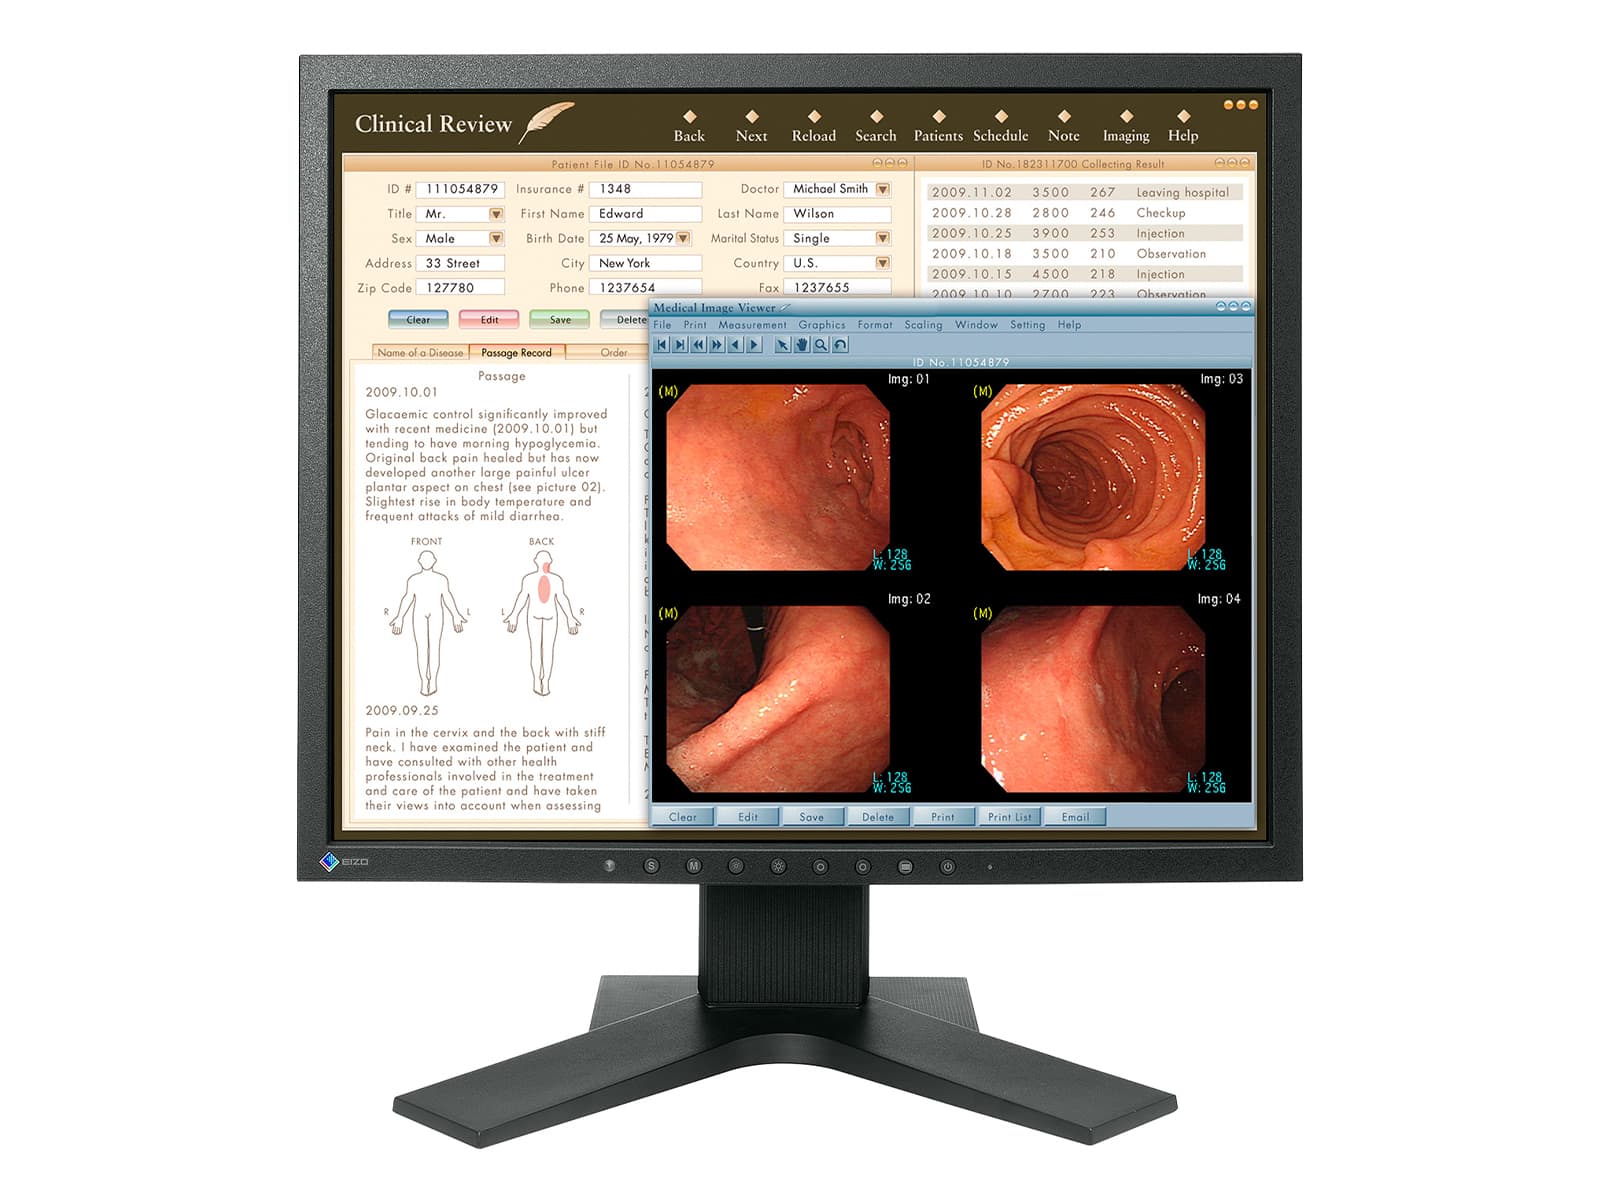 Eizo RadiForce MX191 1MP 19" Color Clinical Review Monitor (MX191) Monitors.com 